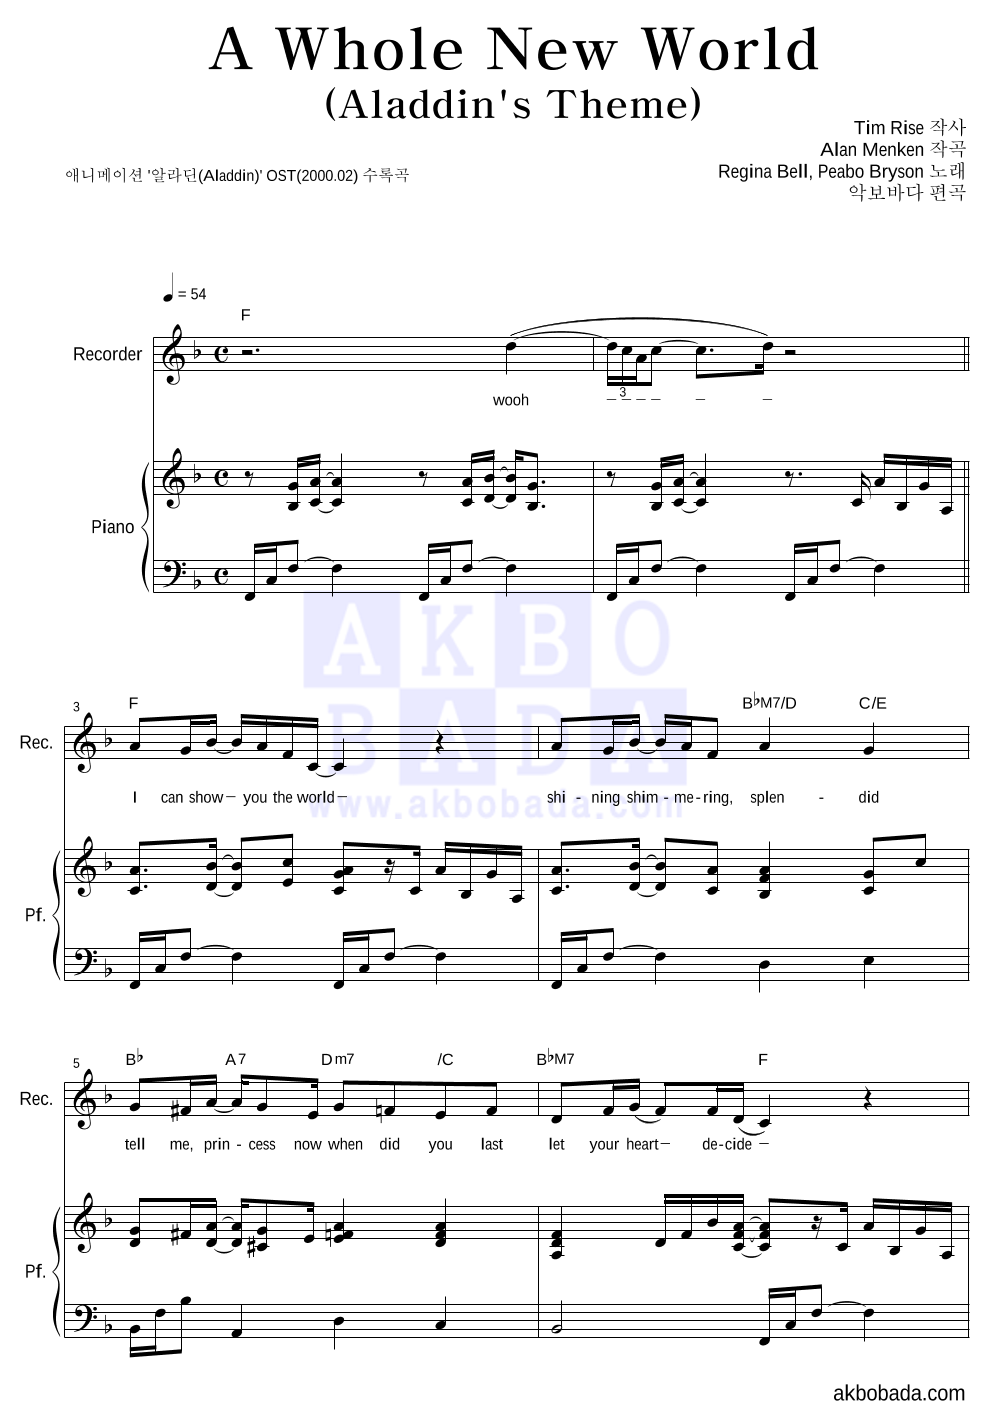 Peabo Bryson - A Whole New World 리코더&피아노 악보 